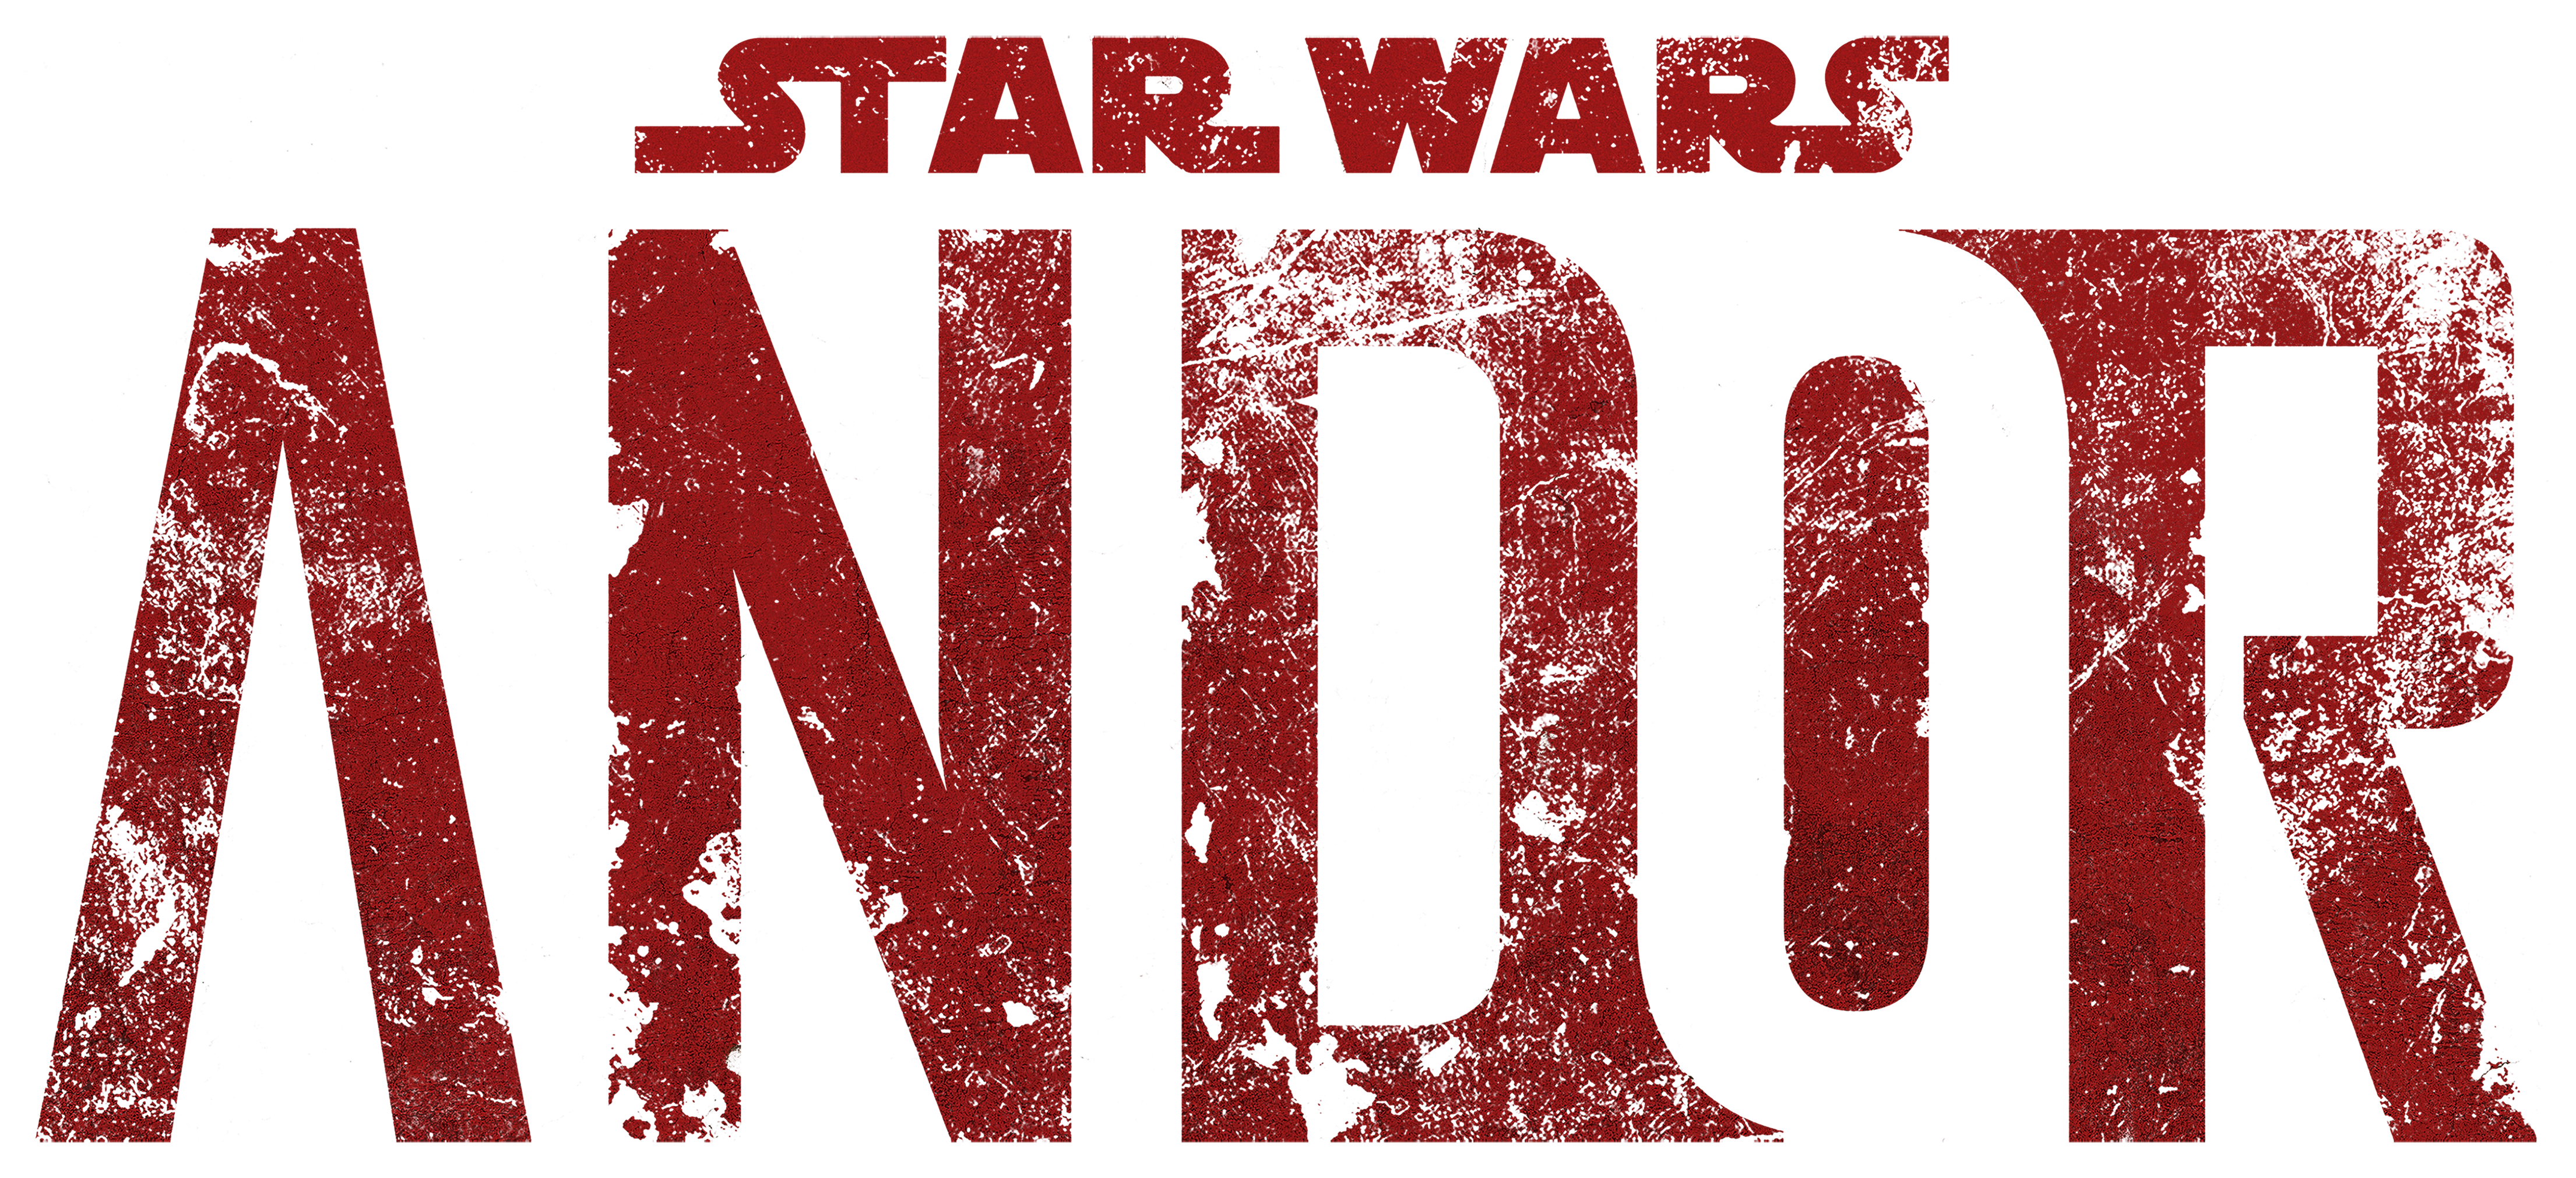 Andor, SEASON 2 PROMO TRAILER, Lucasfilm & Disney+, andor season 2  trailer